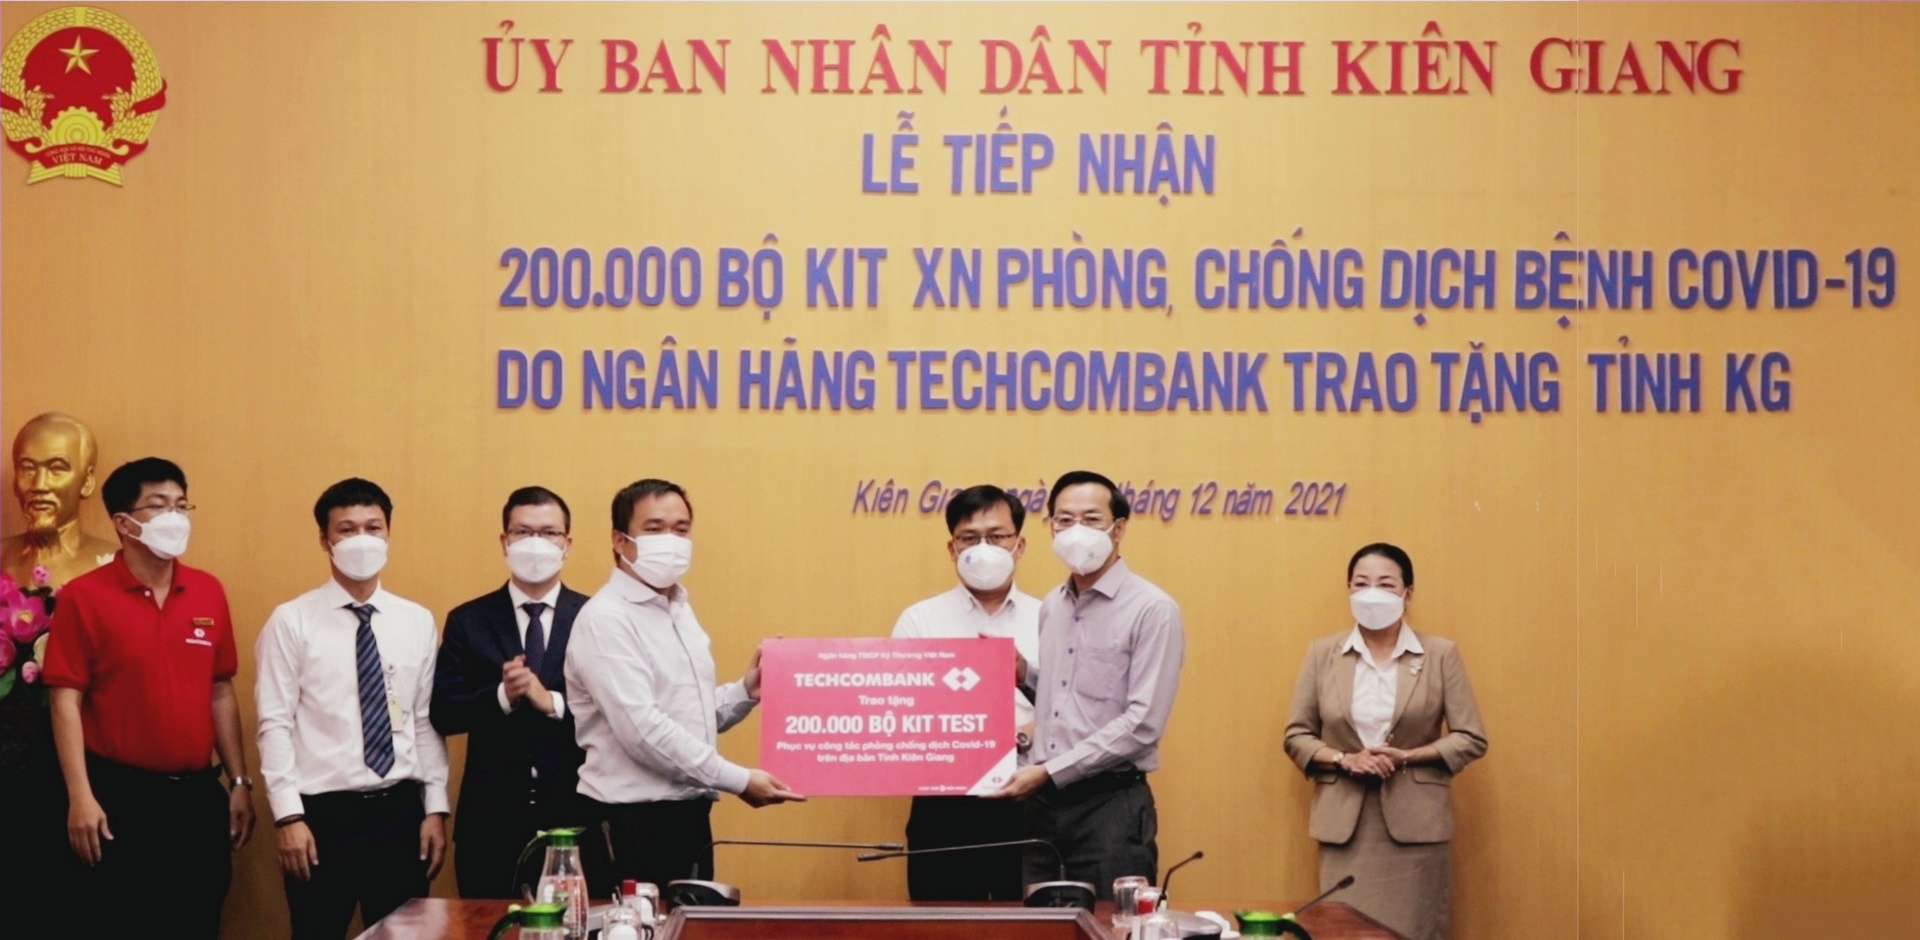 techcombank trao tang tinh kien giang 200000 bo kit xet nghiem covid 19